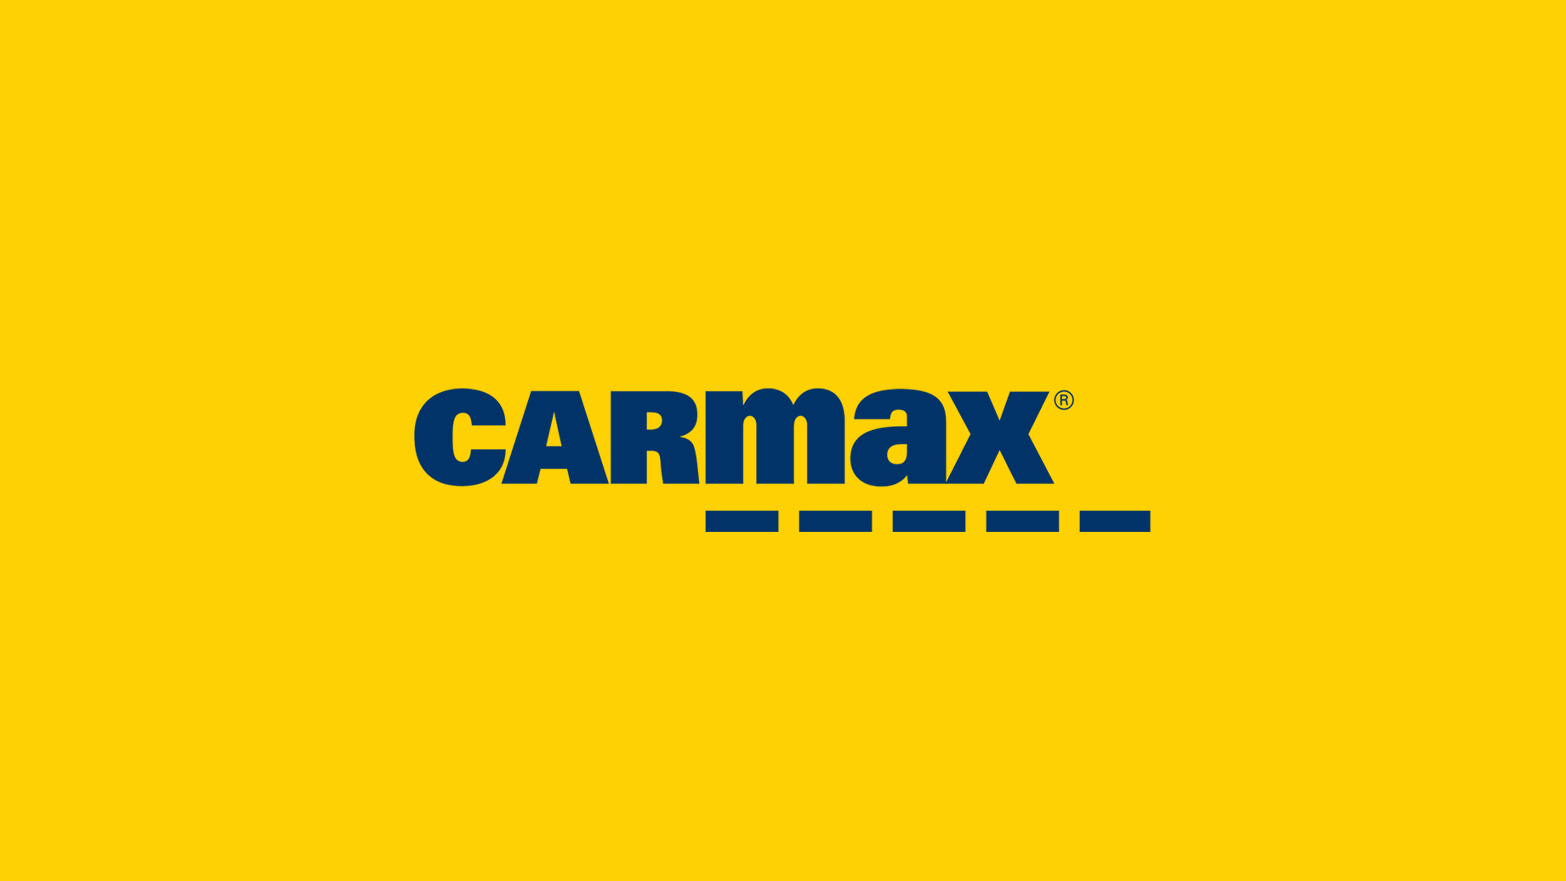 carmax